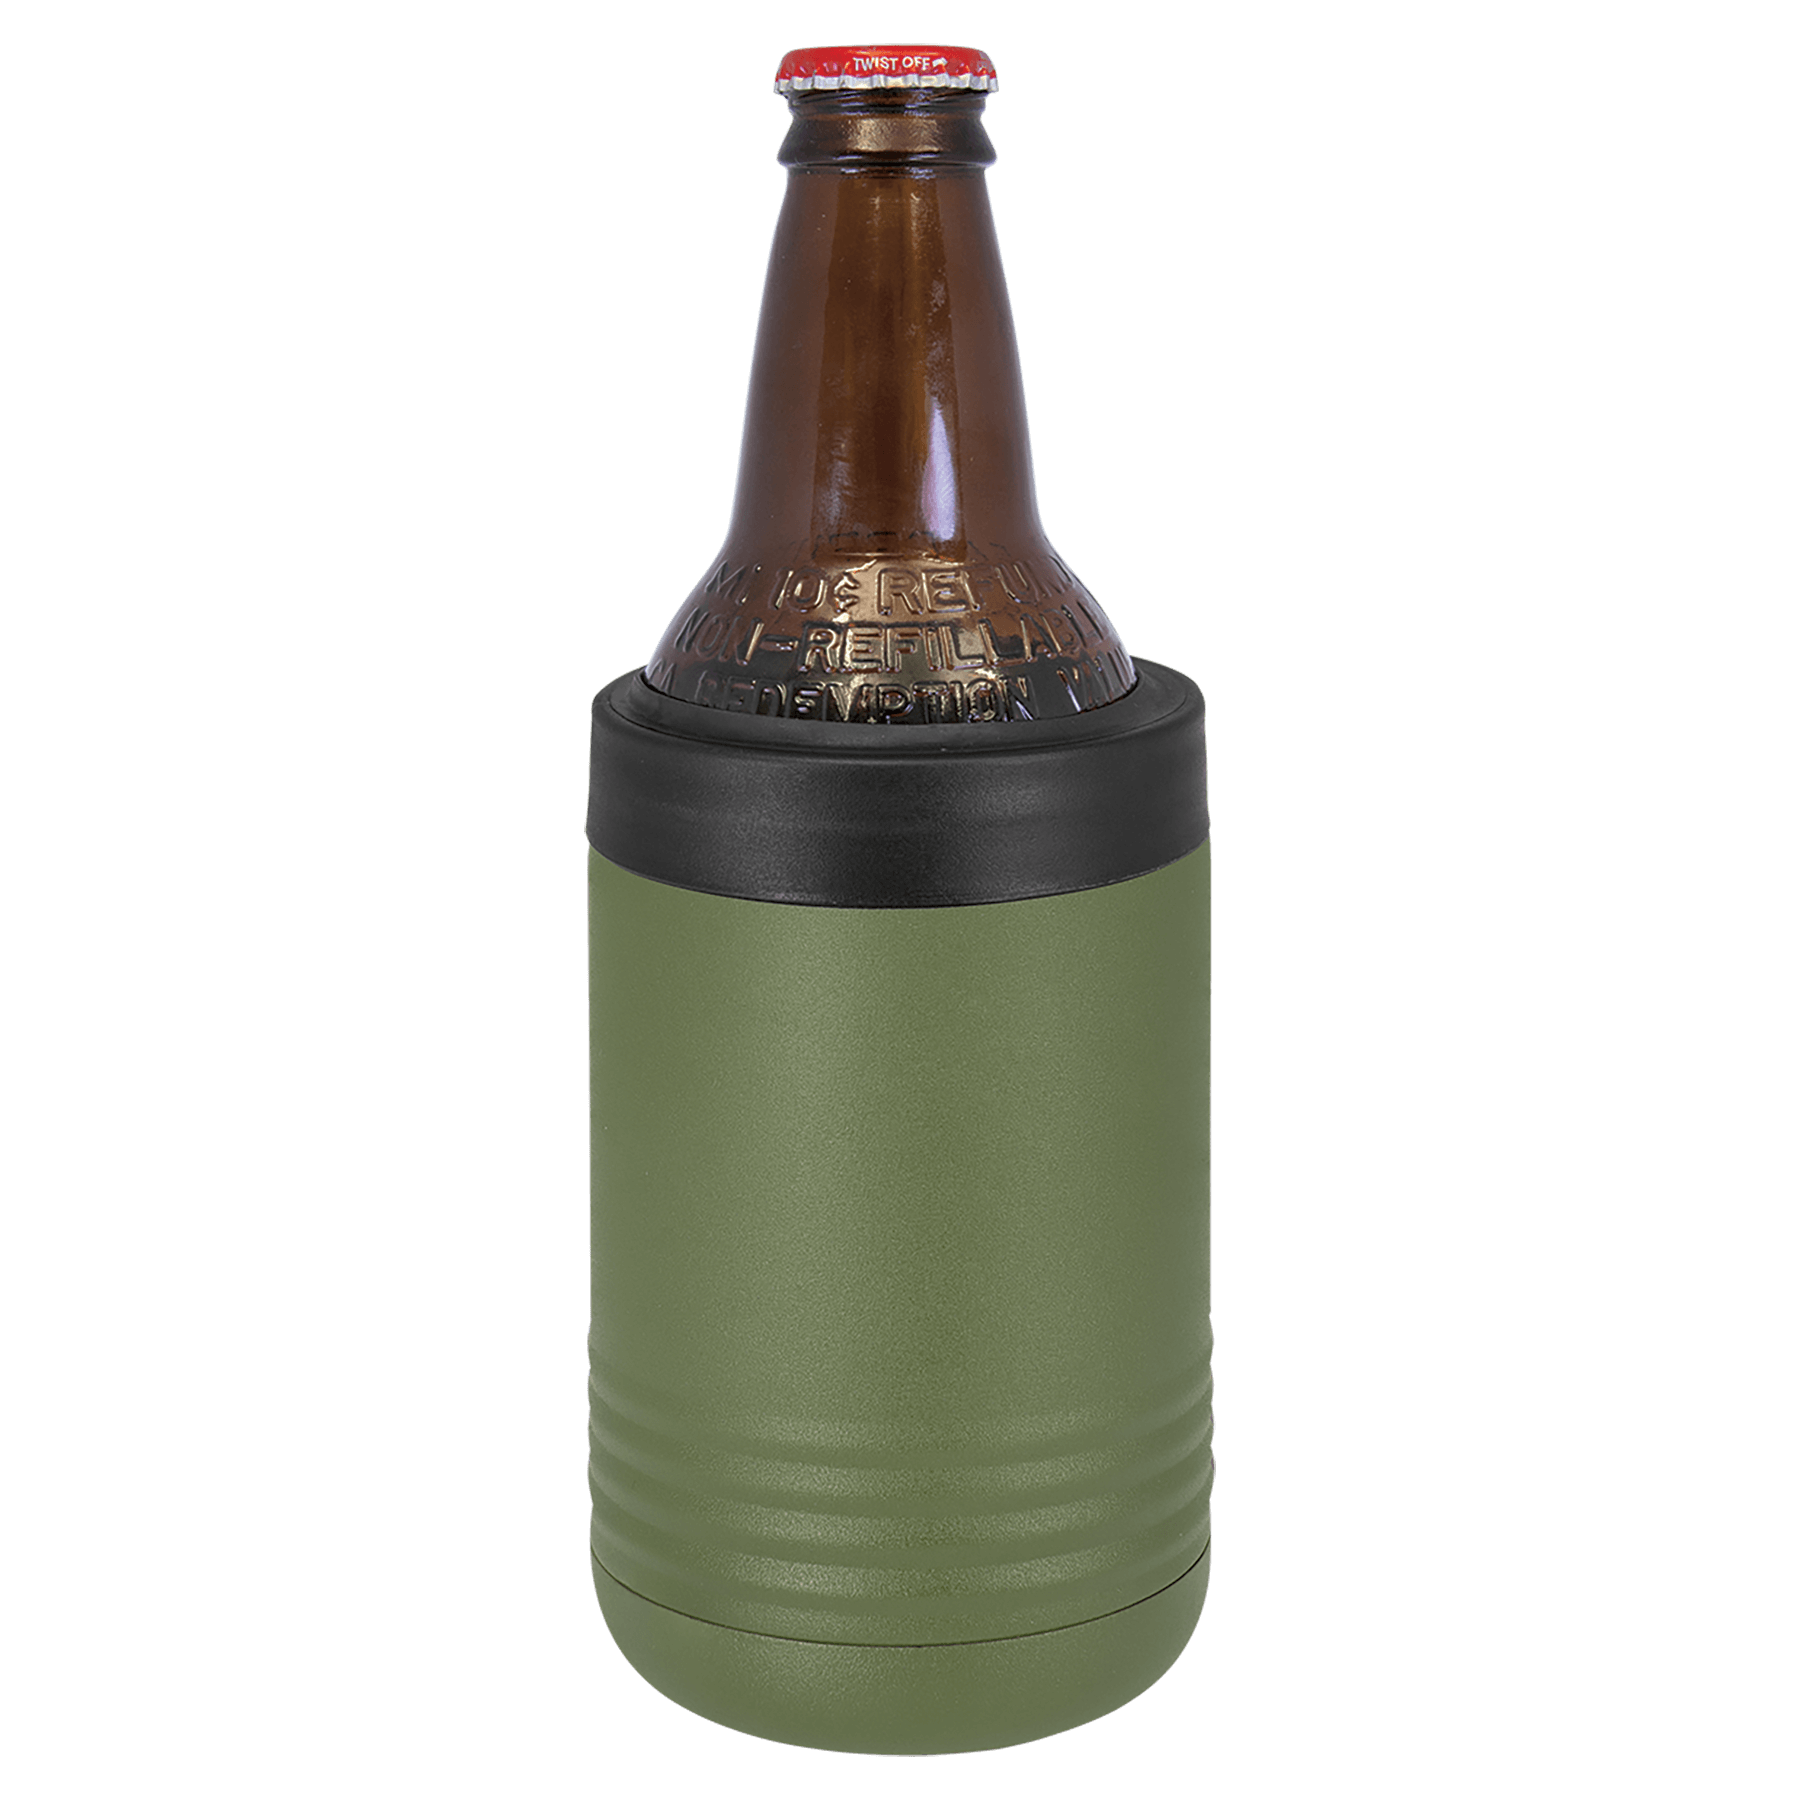 Promo Personalized Beverage Holder for Can / Bottle w Logo Laser